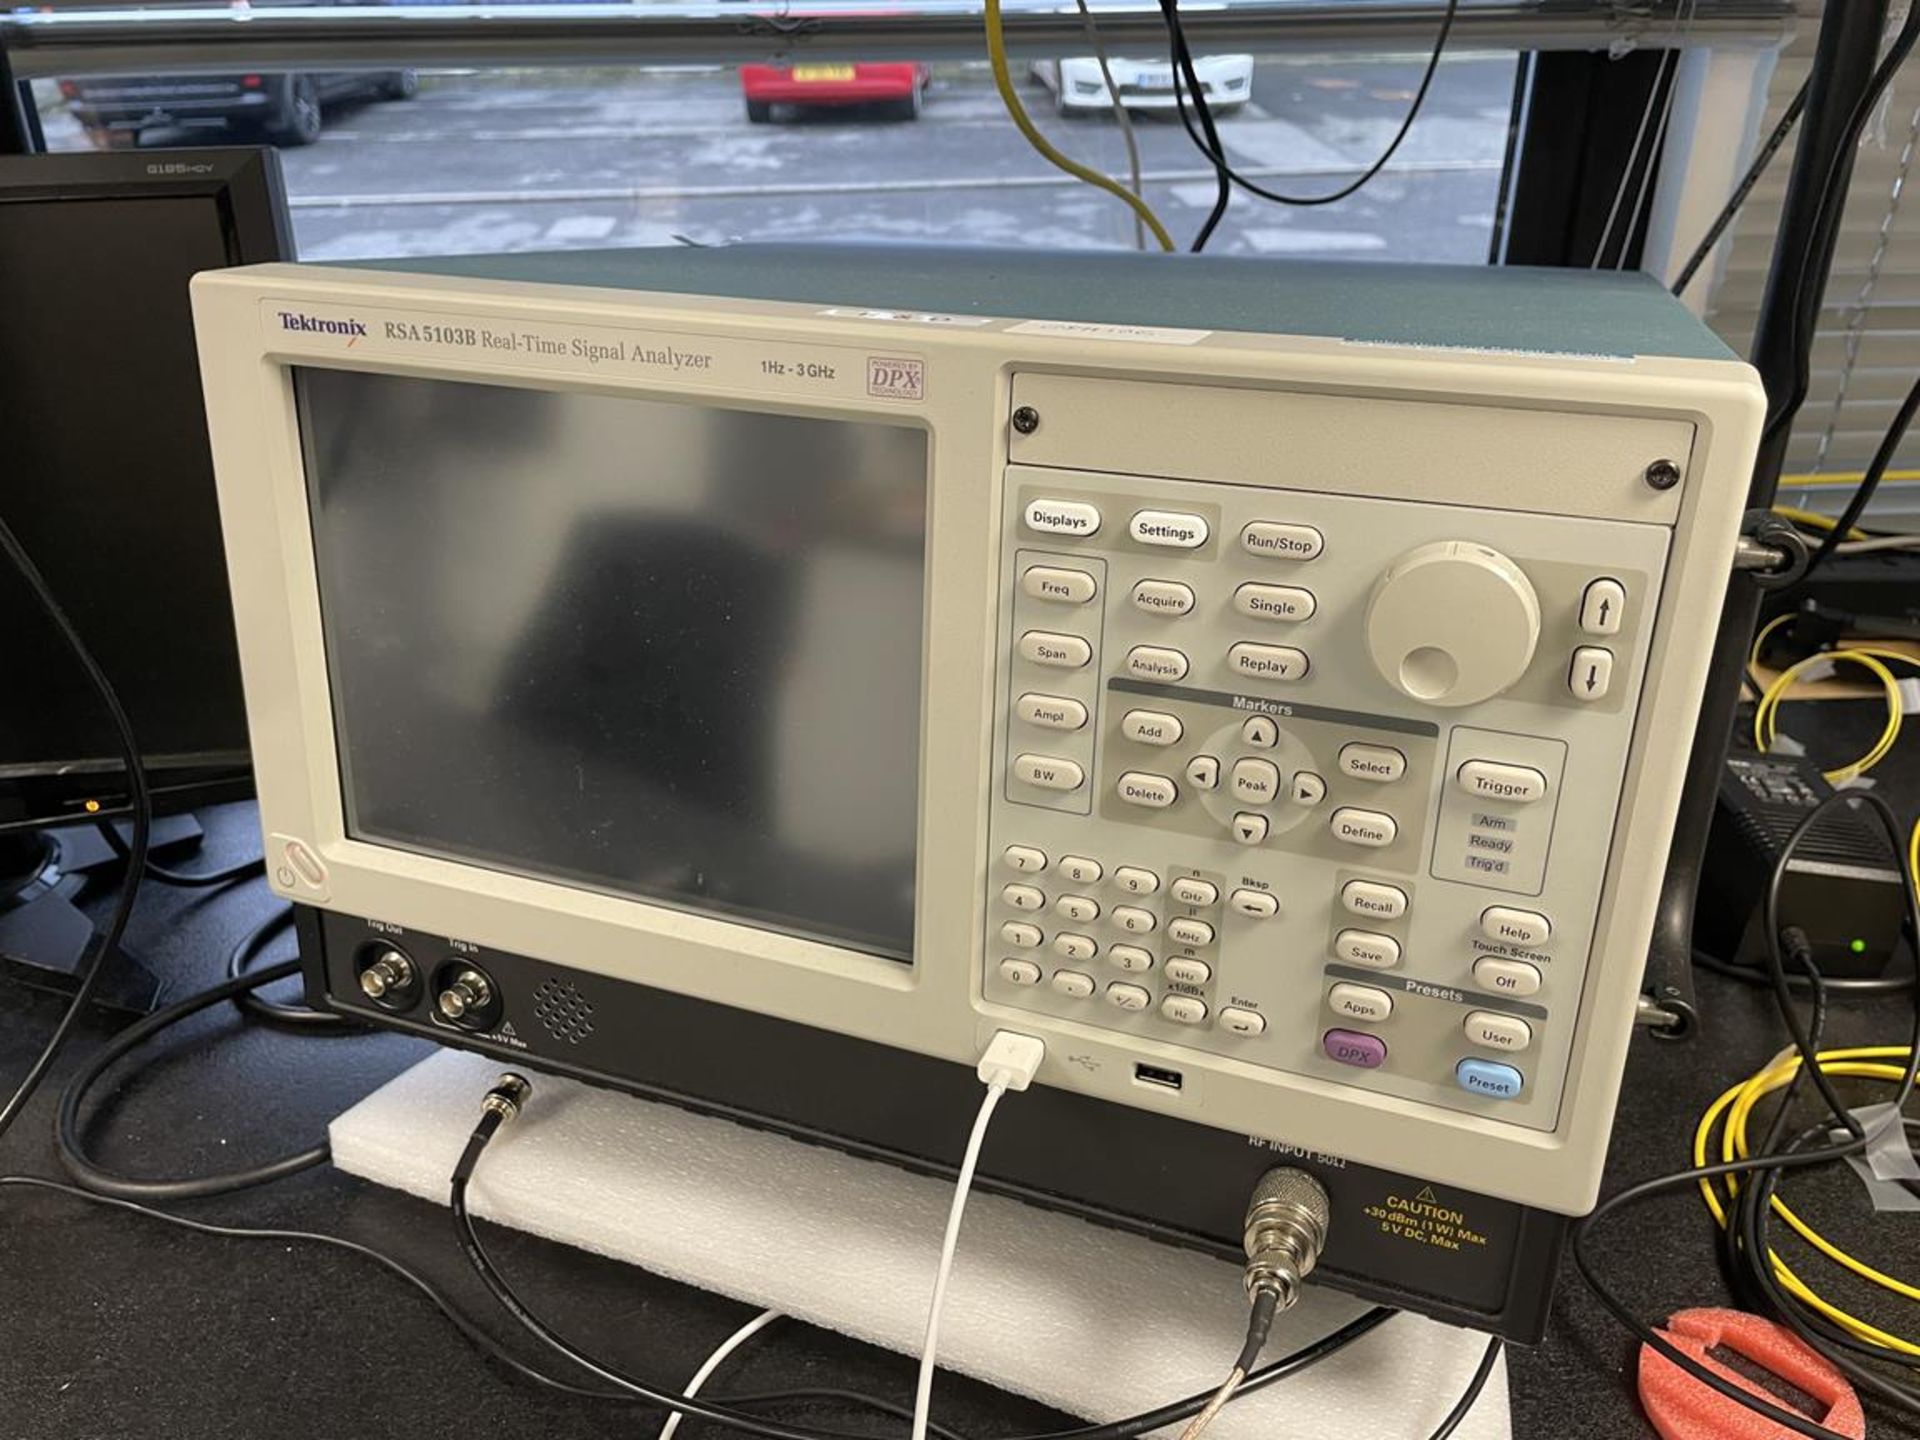 Tekrtronicx RSA 5103B Real-Time Signal Analyser 1Hz-3 GHz (GB REF#106)